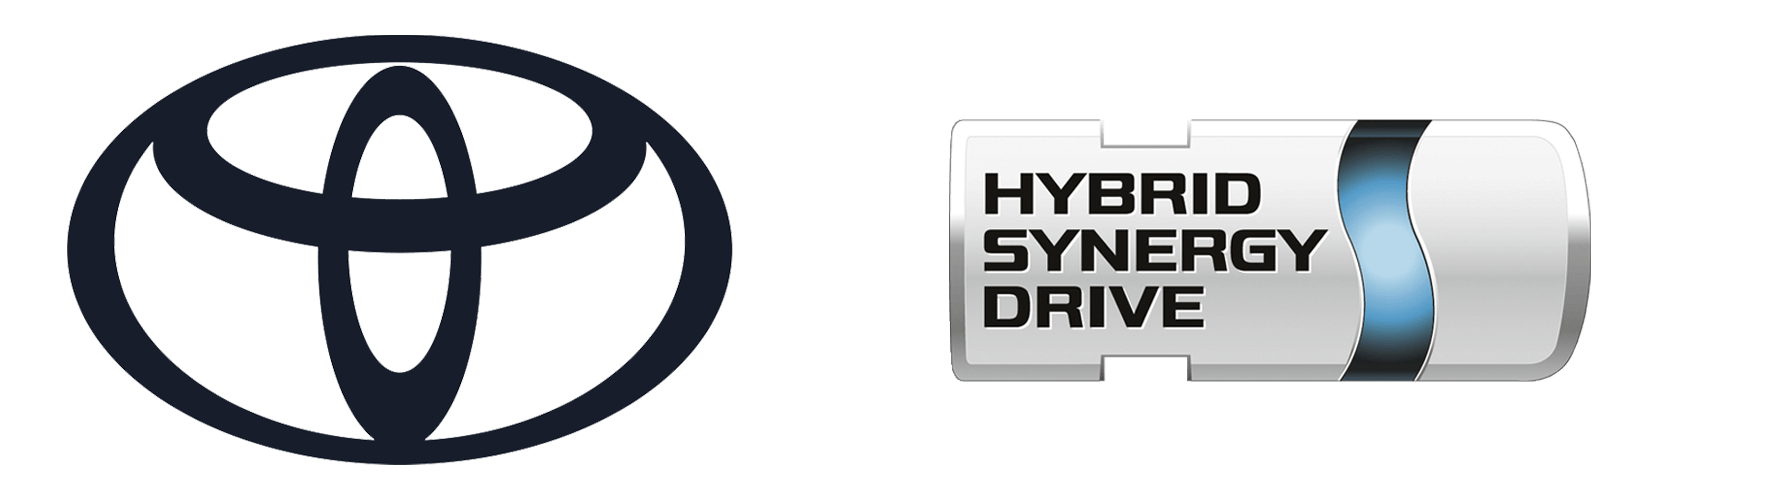 Hybrid Synergy Drive Ingredient Branding by Toyota